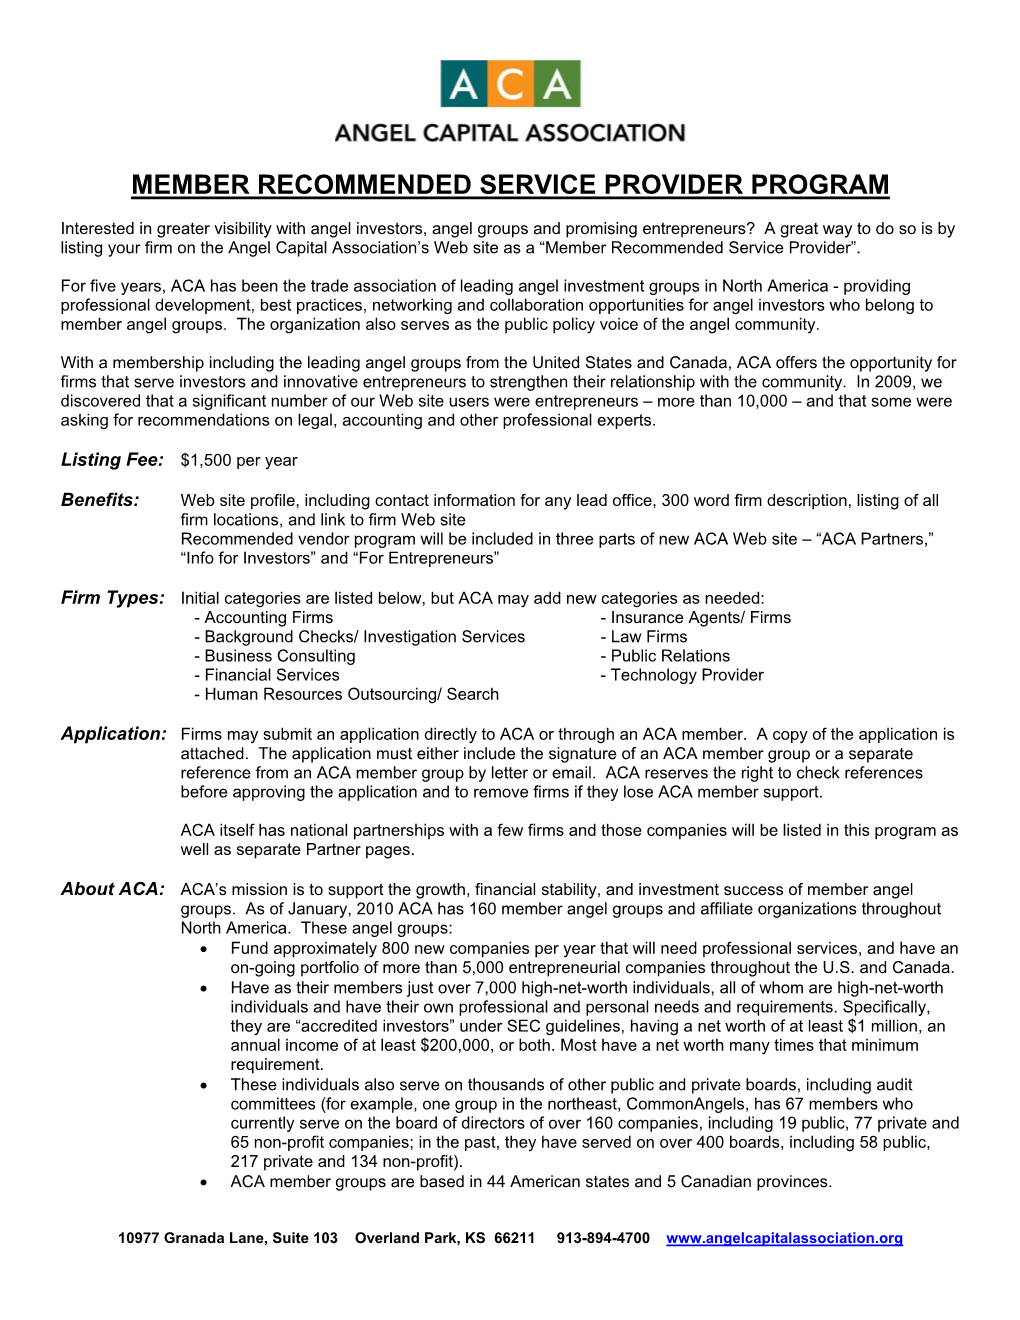 Member Recommended Service Provider Program